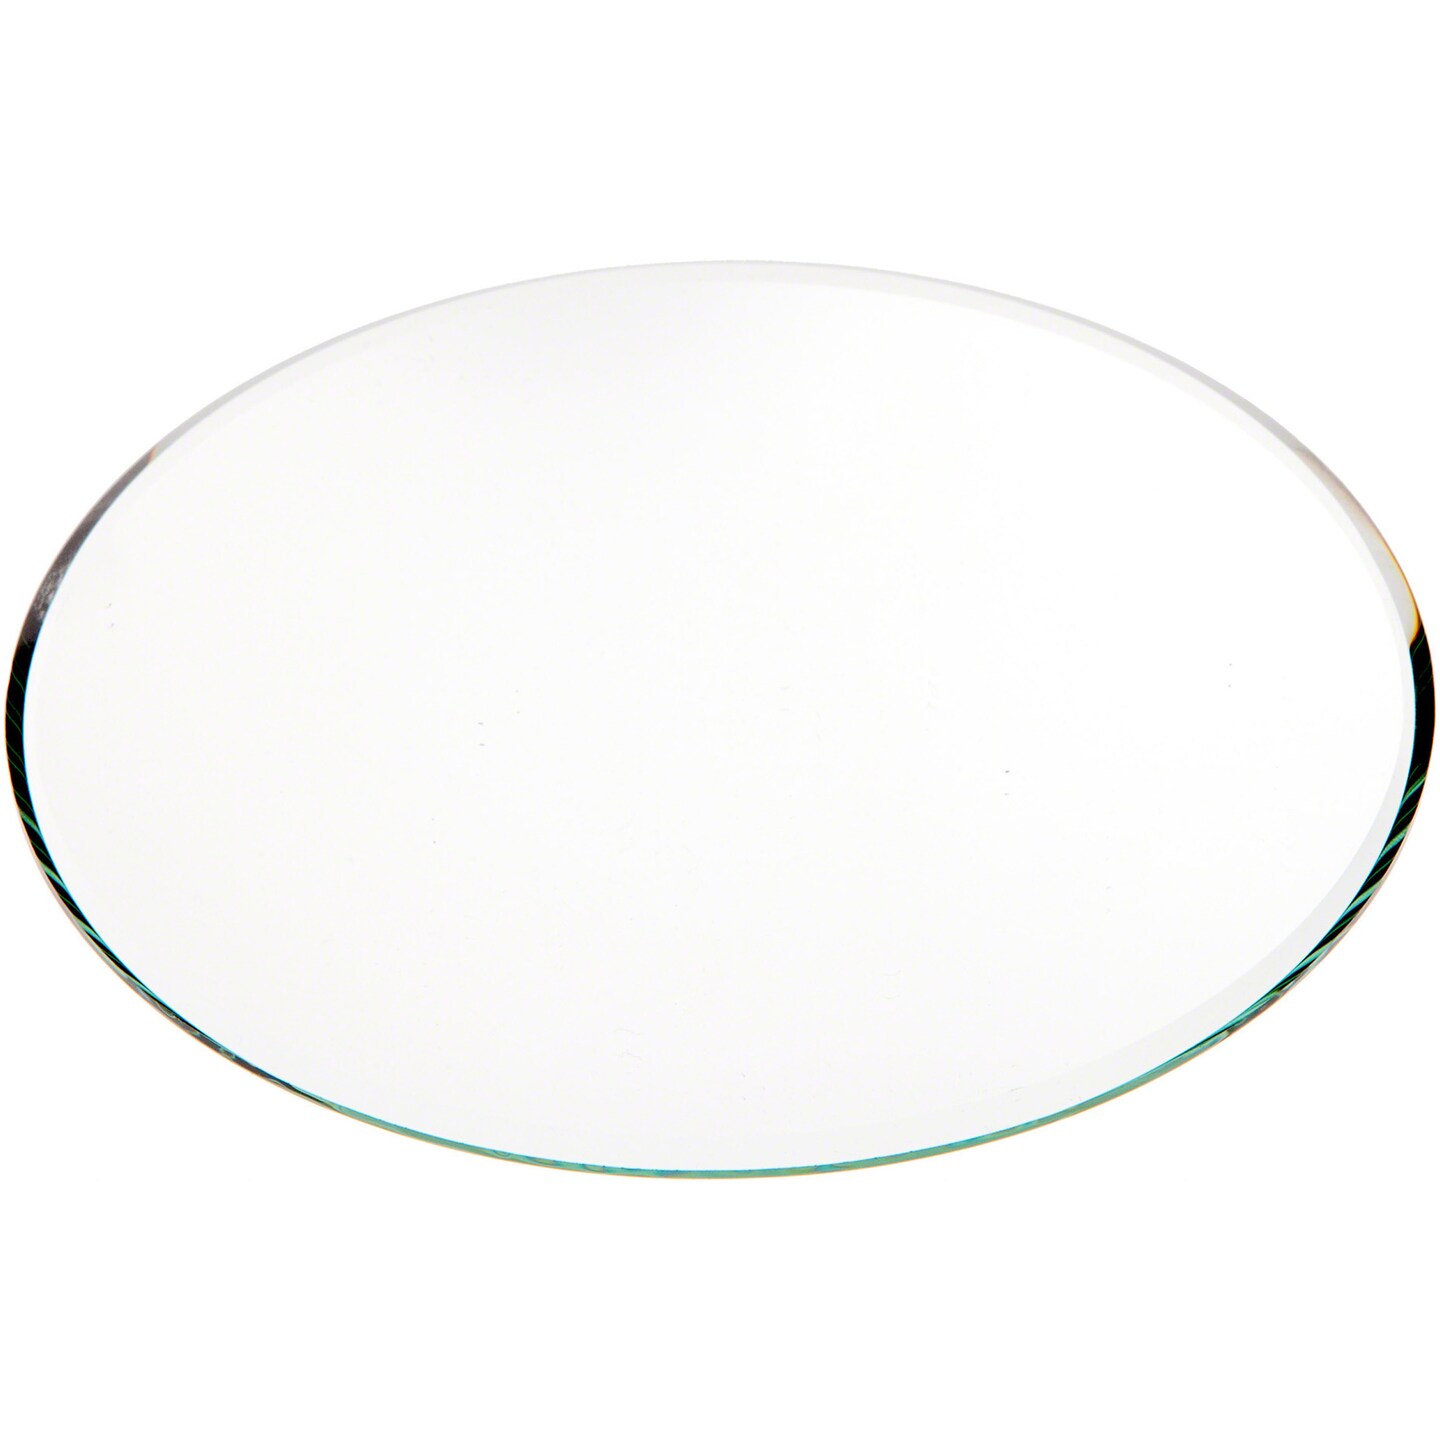 Plymor Round 3mm Beveled Glass Mirror, 6 inch x 6 inch